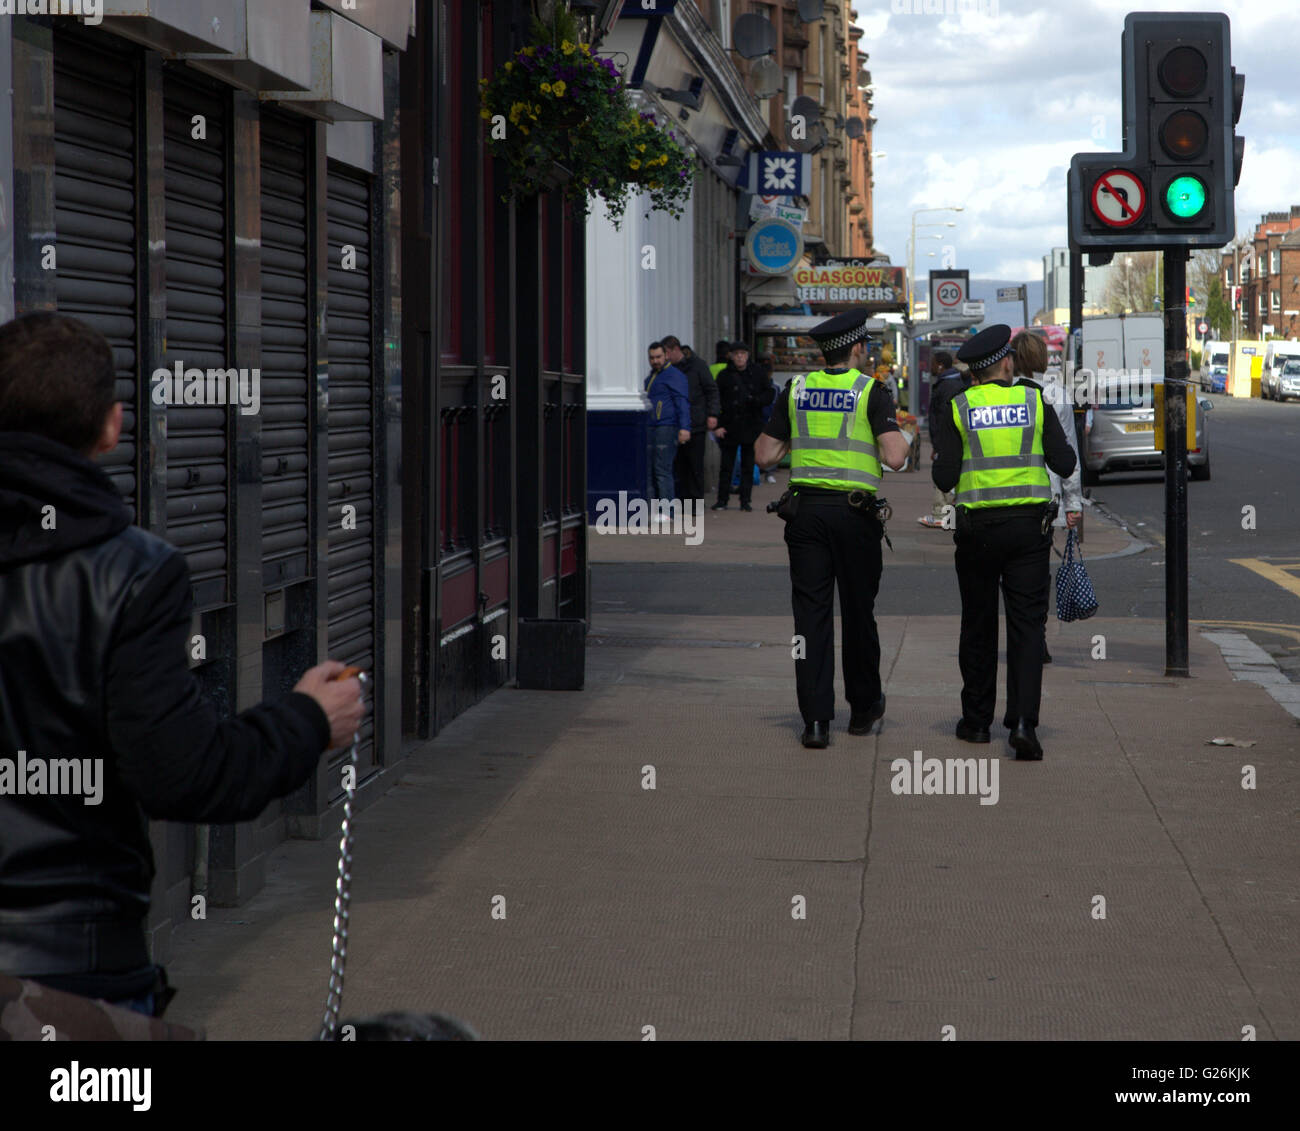 Police on patrol in the worst area of Scotland, Govanhill Glasgow,, Scotland, UK. Stock Photo